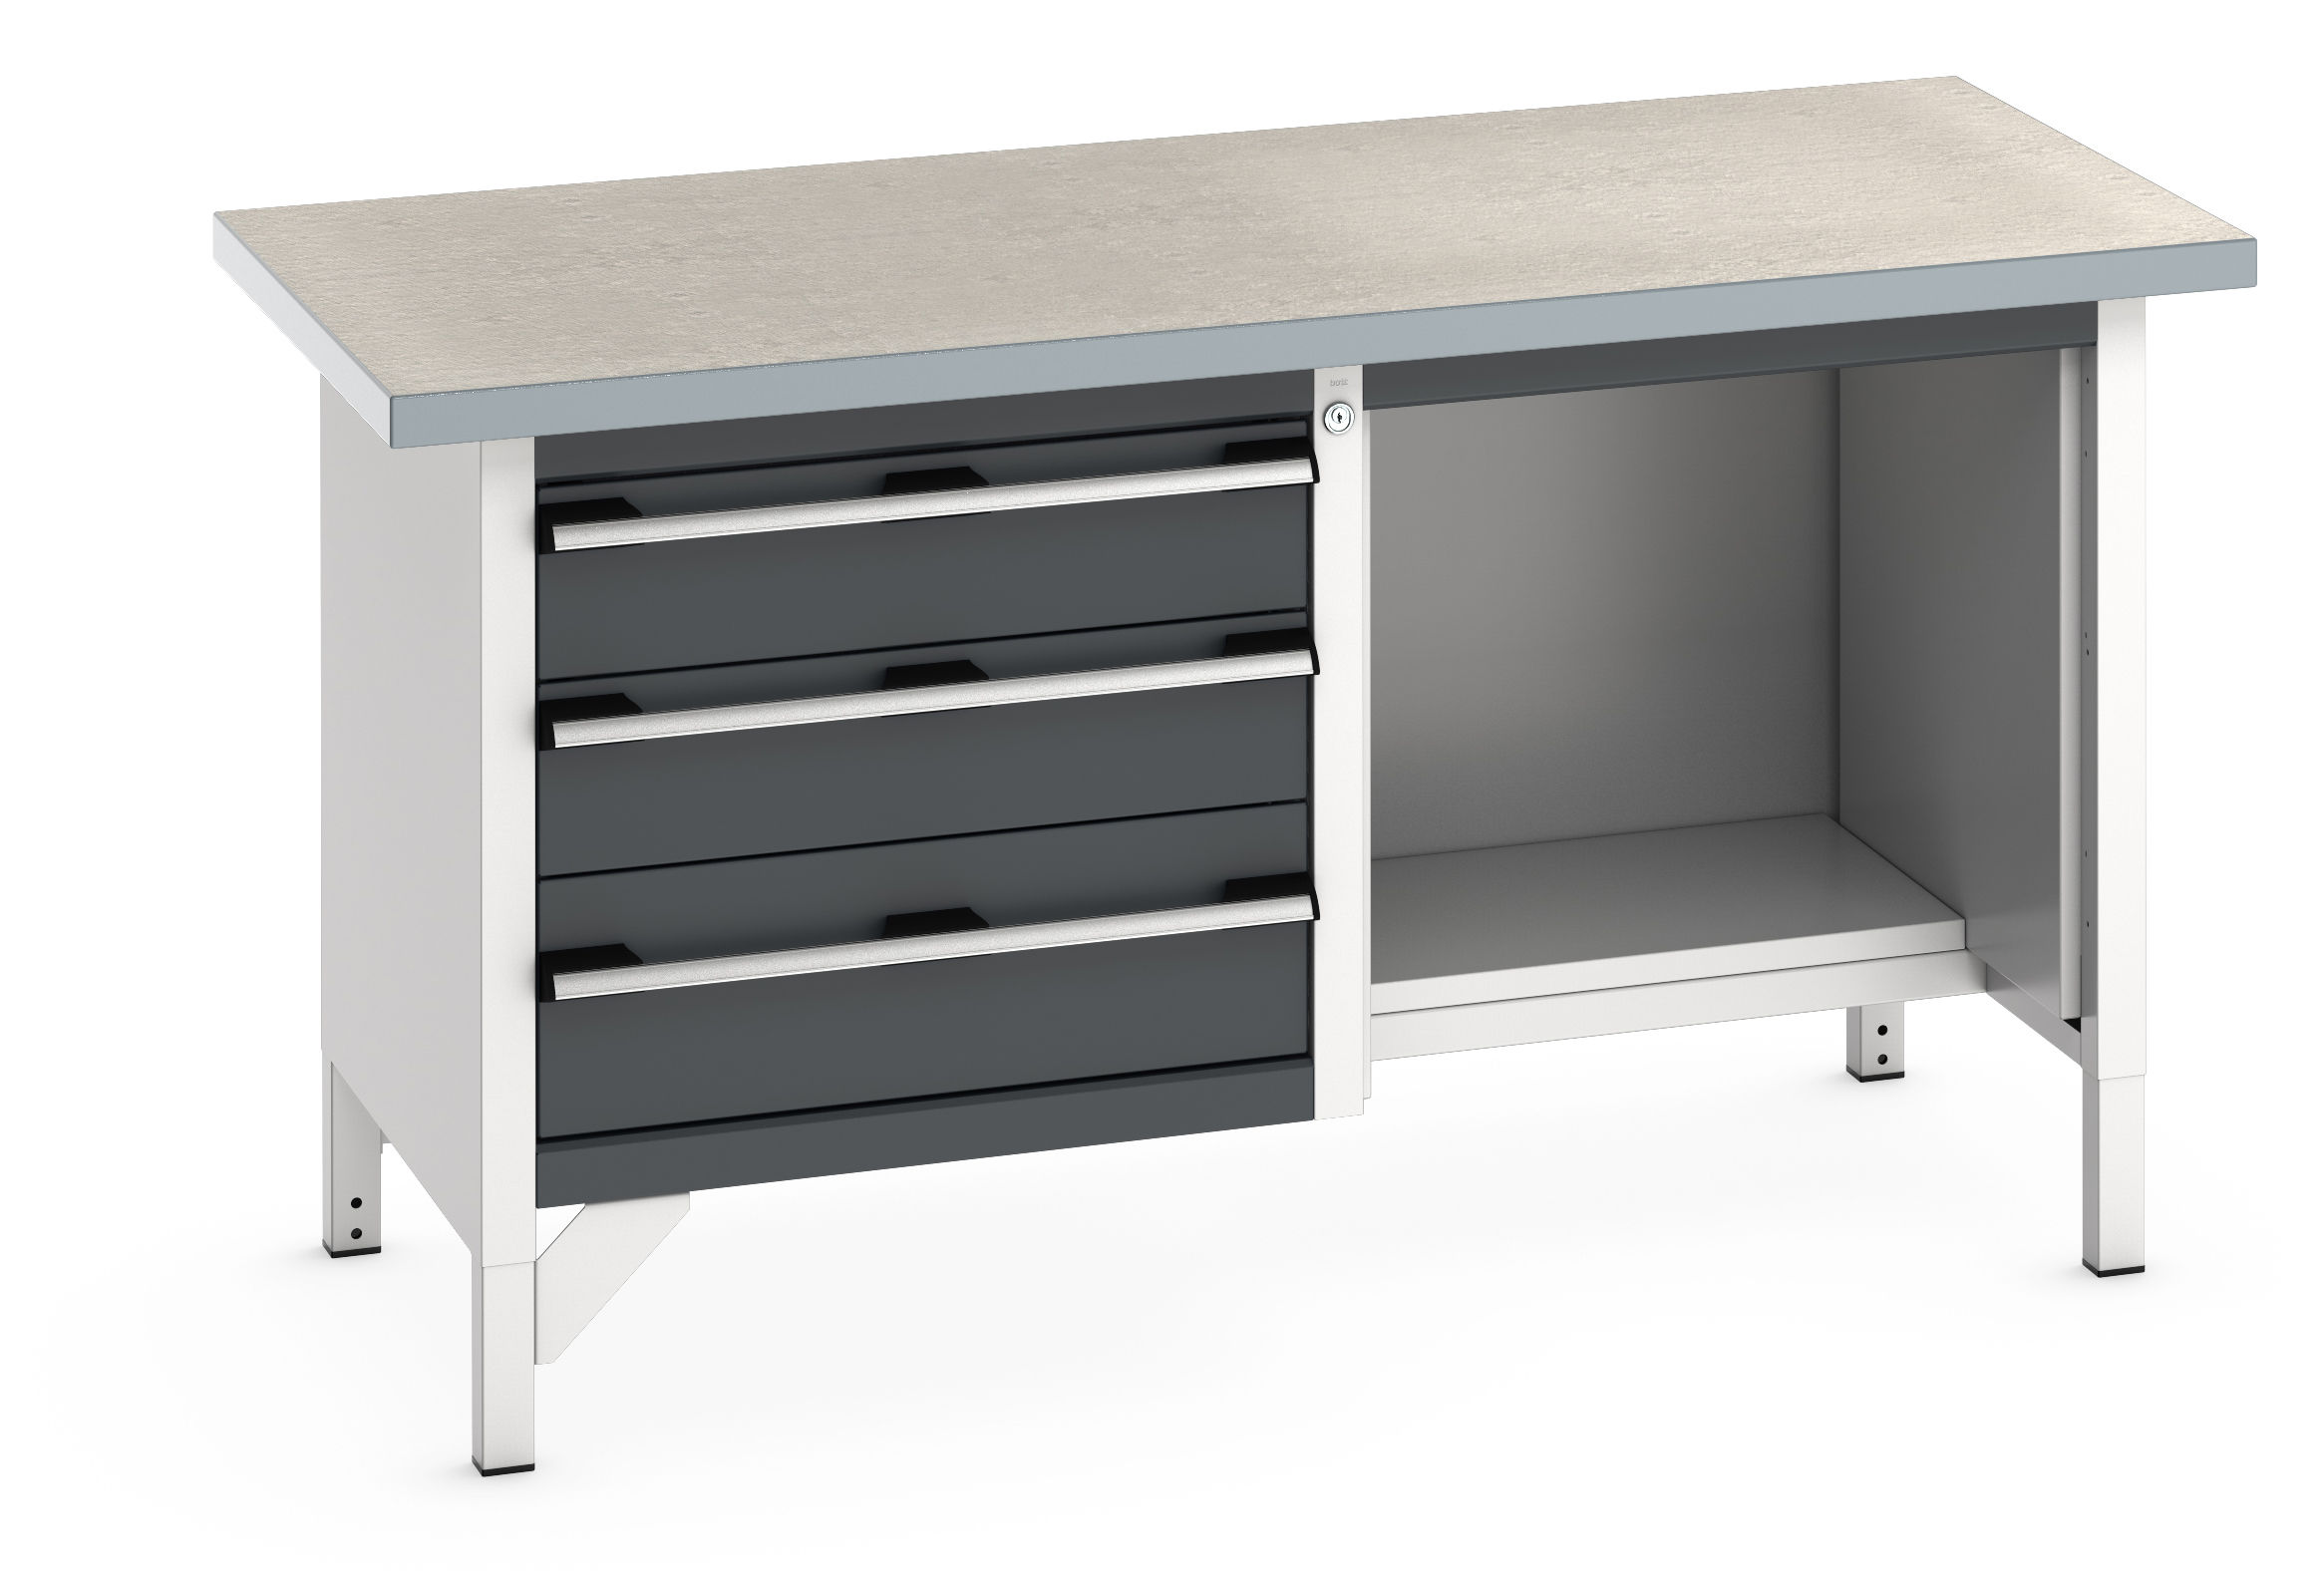 Bott Cubio Storage Bench With 3 Drawer Cabinet / Open With Half Depth Base Shelf - 41002042.19V